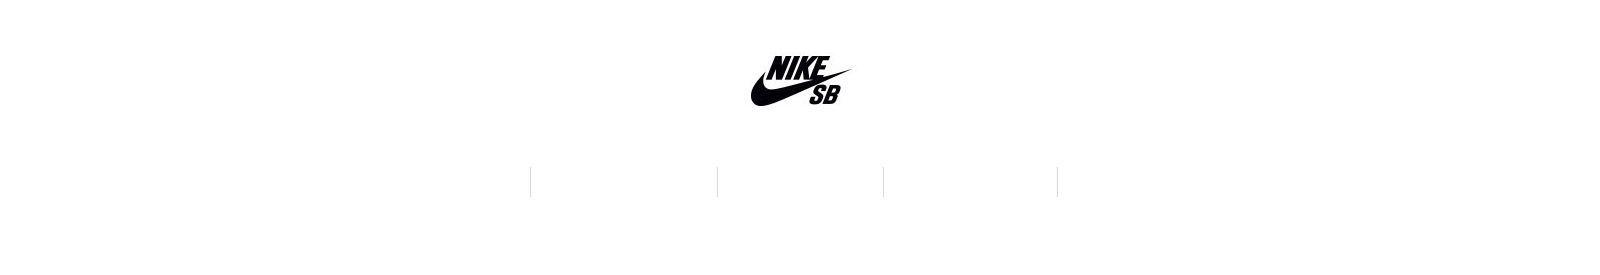 Nike Skateboarding Logo - LogoDix